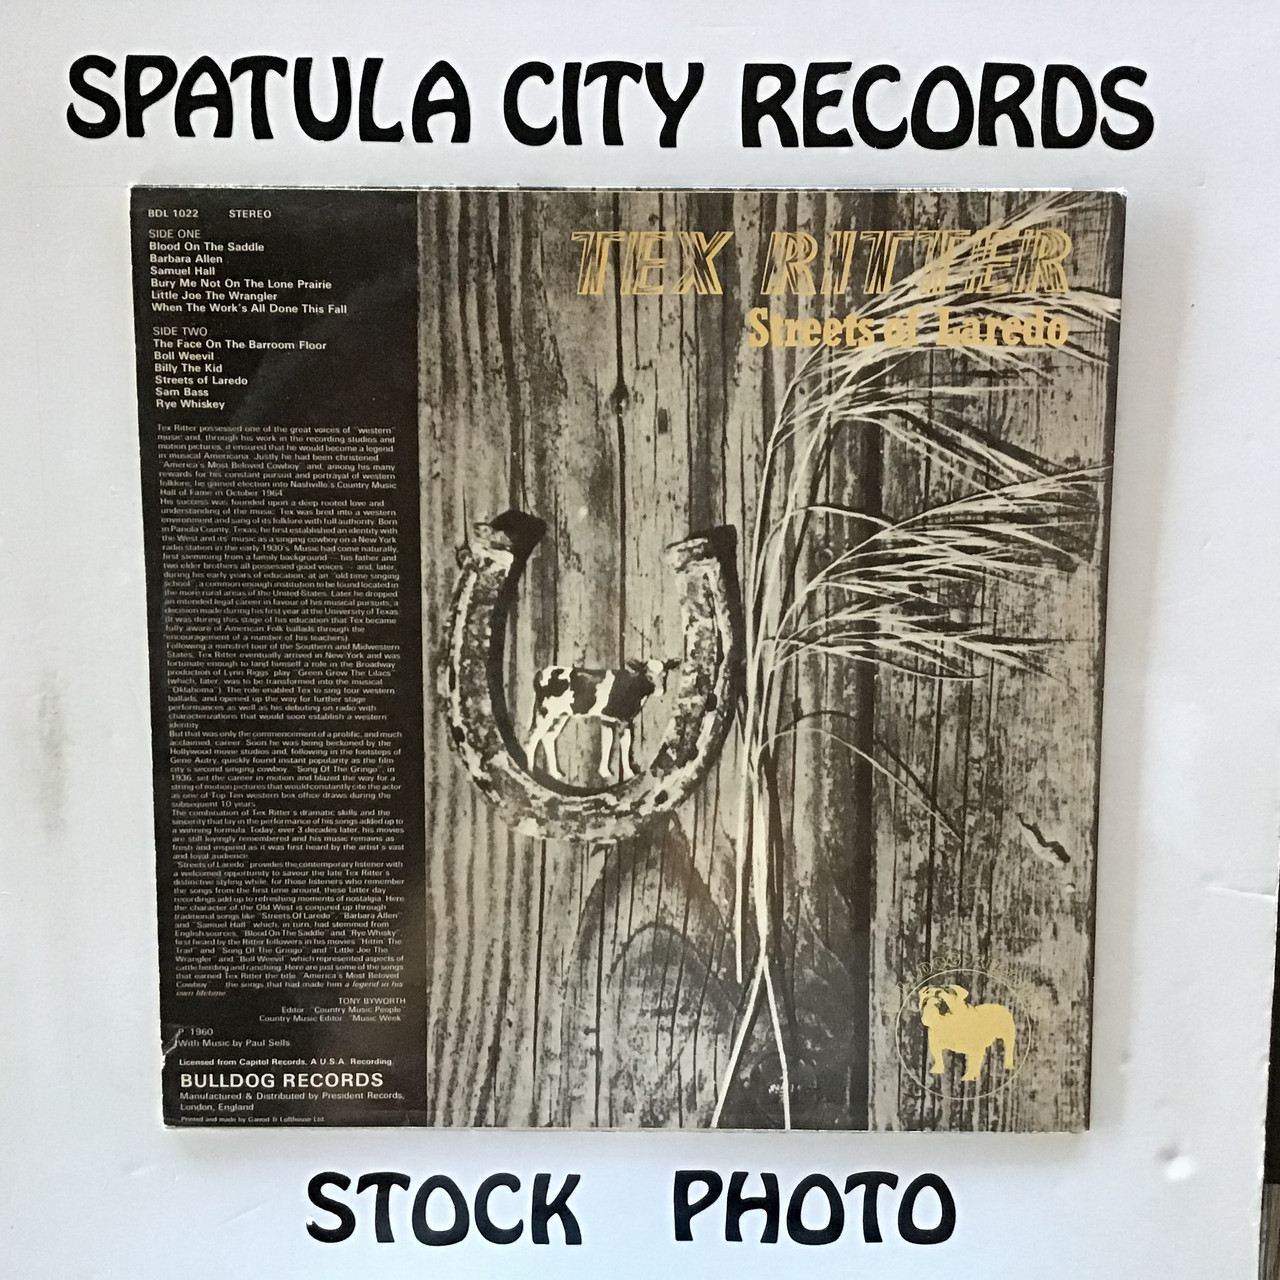 Tex Ritter - Streets of Laredo - IMPORT - vinyl record LP